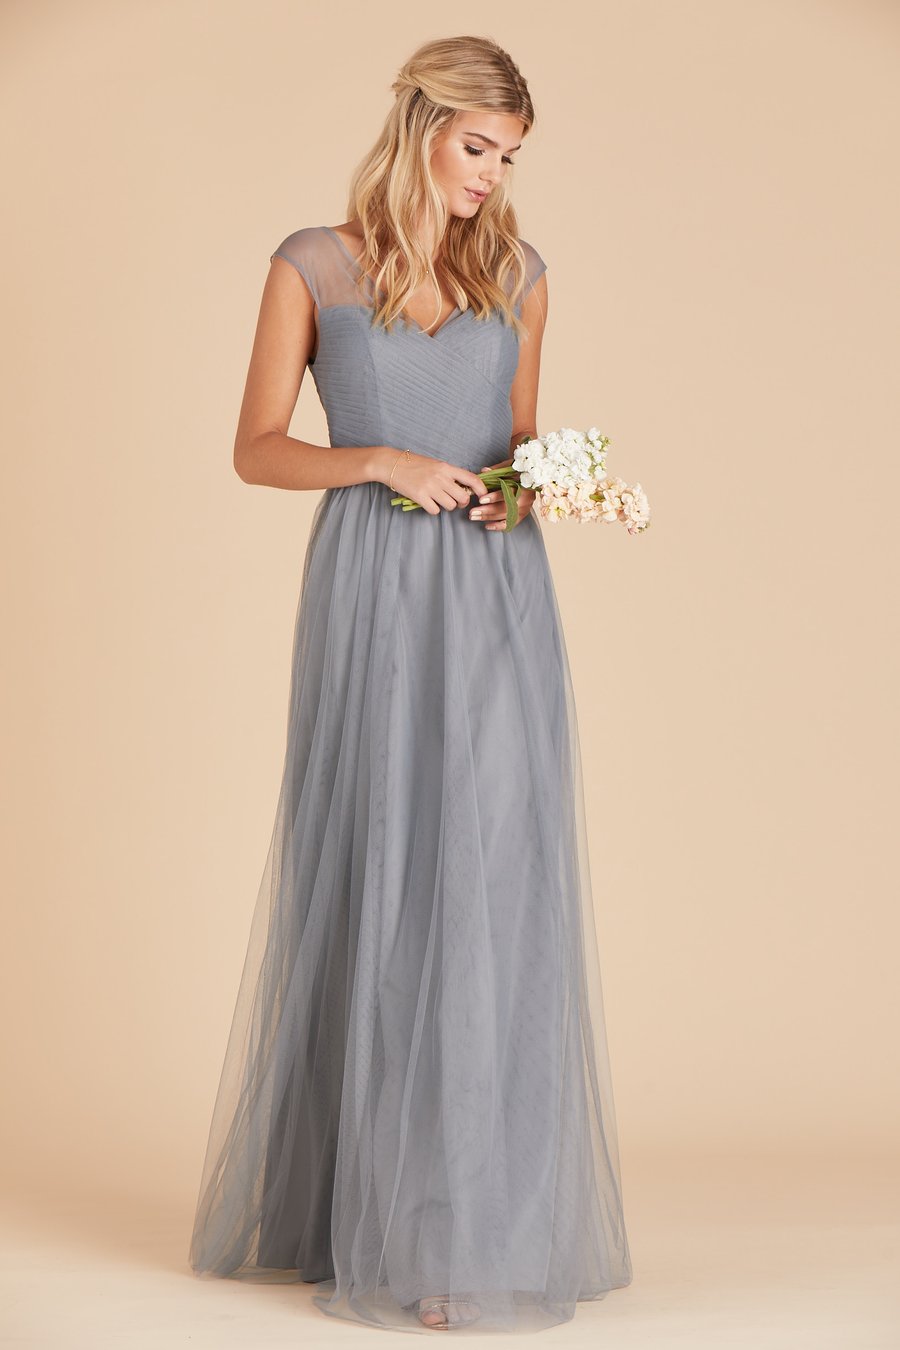 halter bridesmaid dresses under 100